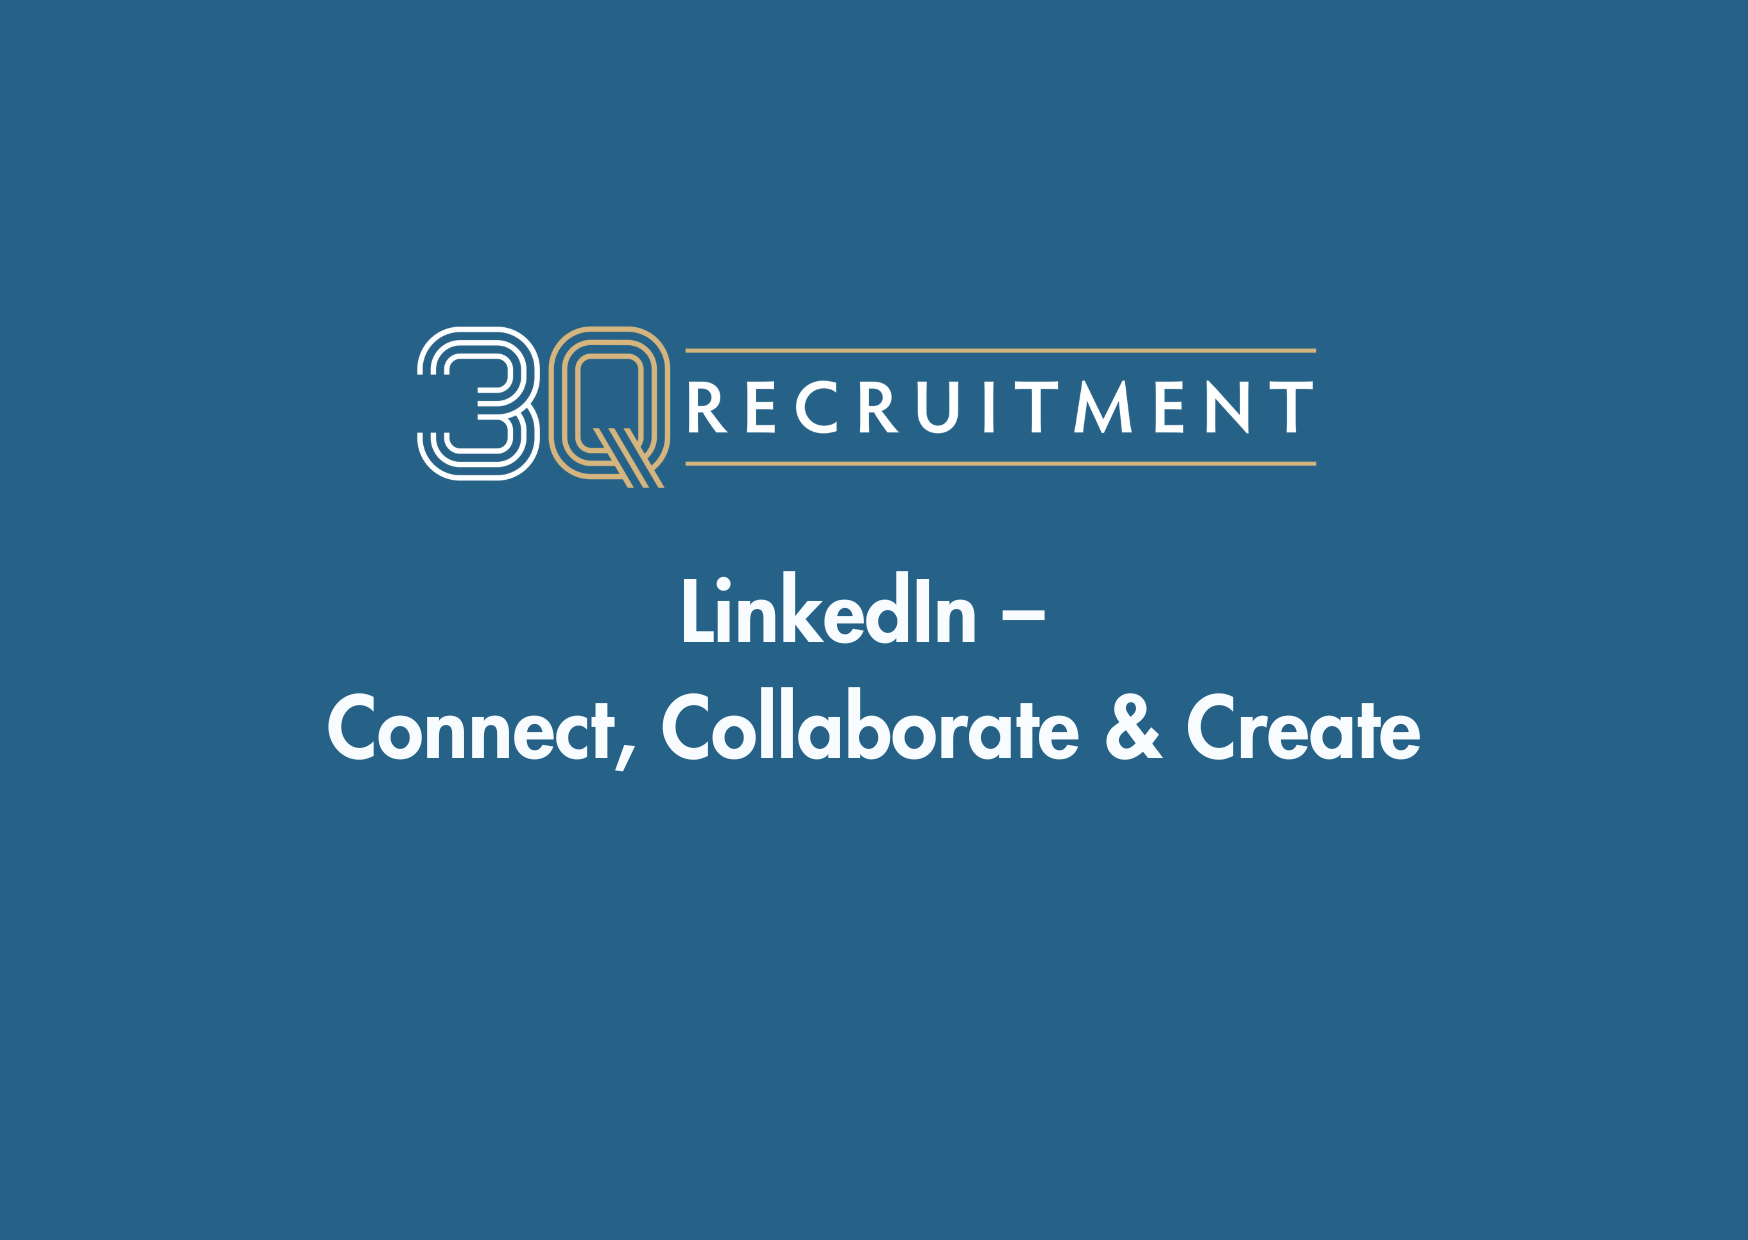 3Q Recruitment LinkedIn – Connect, Collaborate & Create